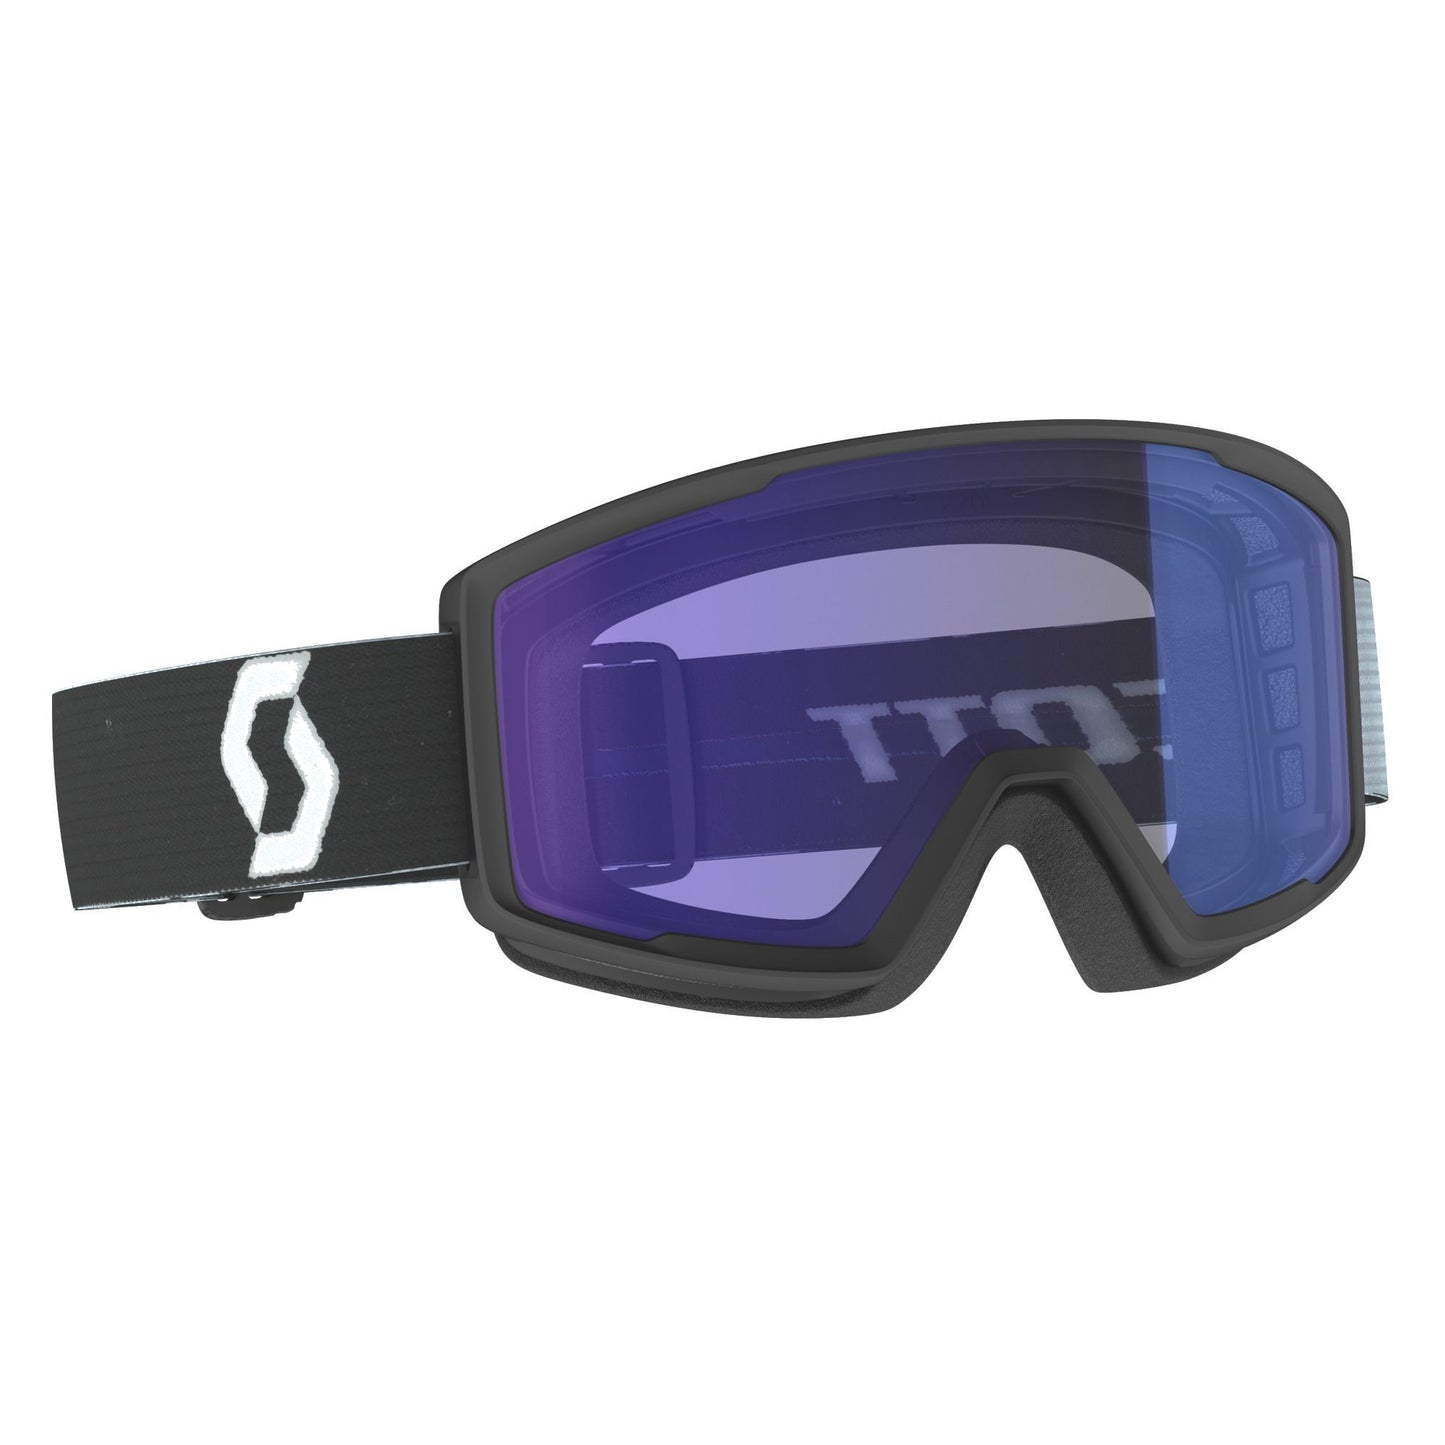 Scott Factor Pro Snow Goggle Team White Black Illuminator Blue Chrome Snow Goggles